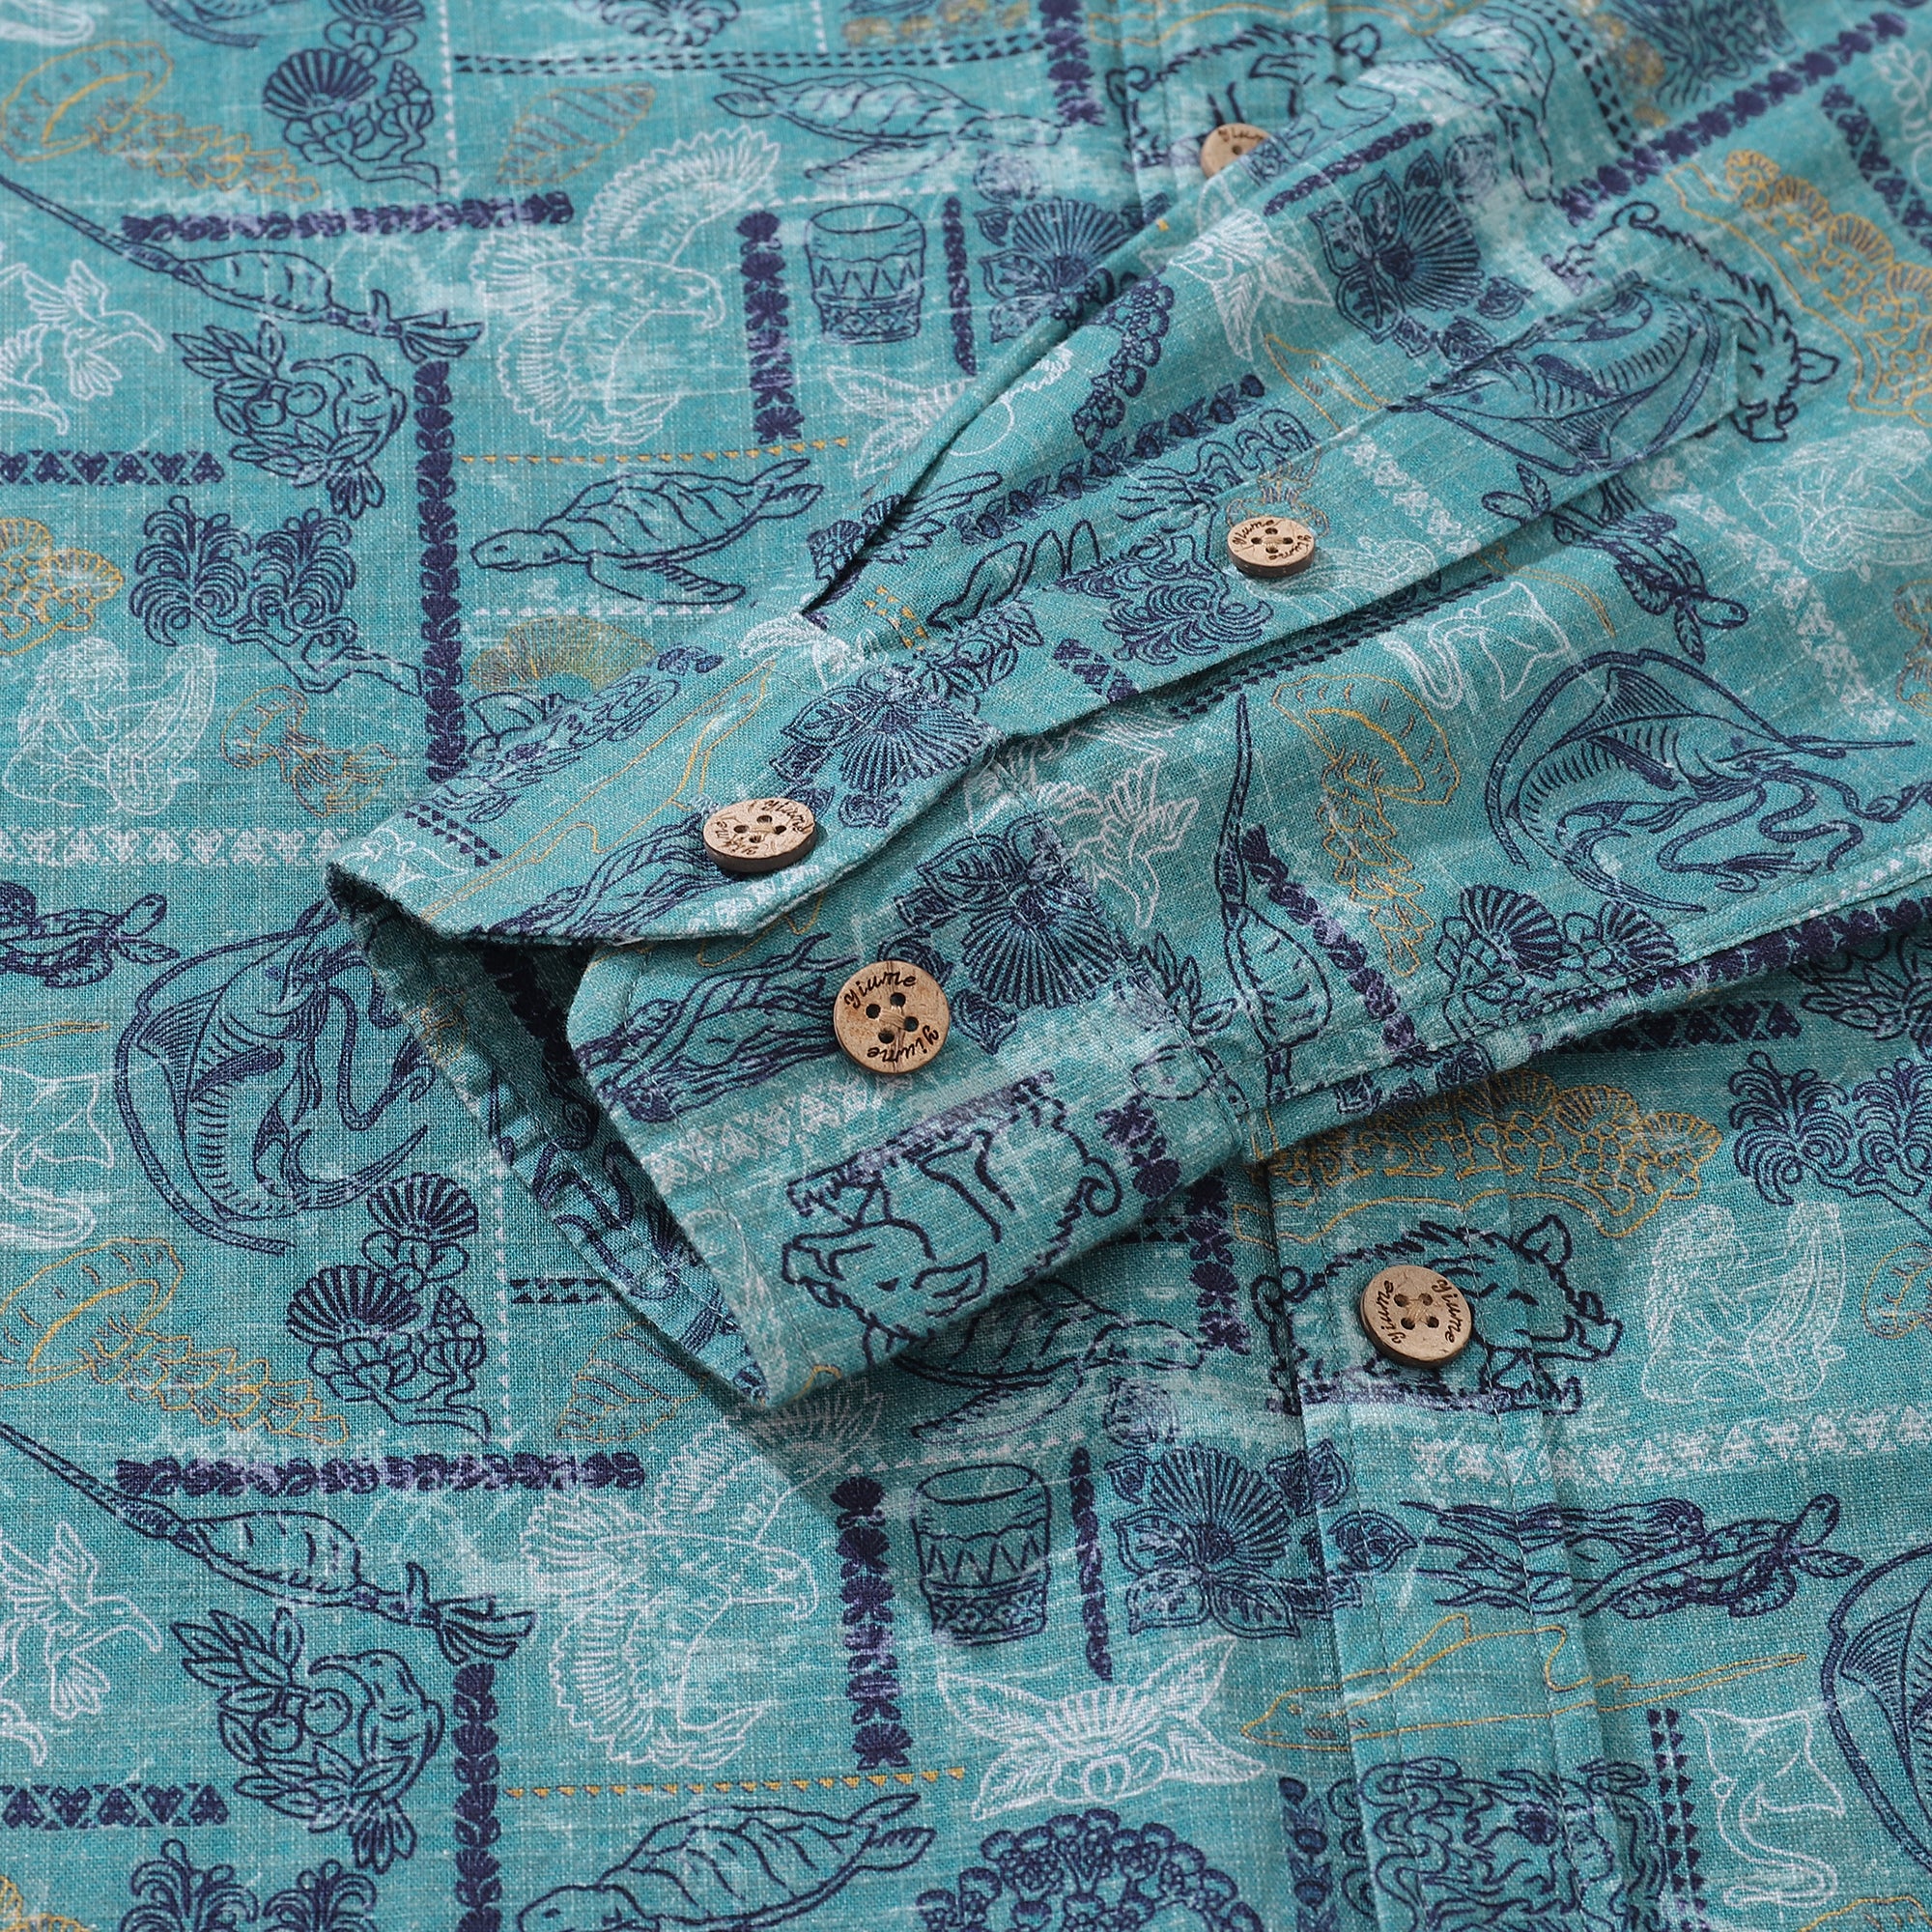 Men's Hawaiian Shirt Pele and Hiiaka Cotton Button-down Long Sleeve Aloha Shirt